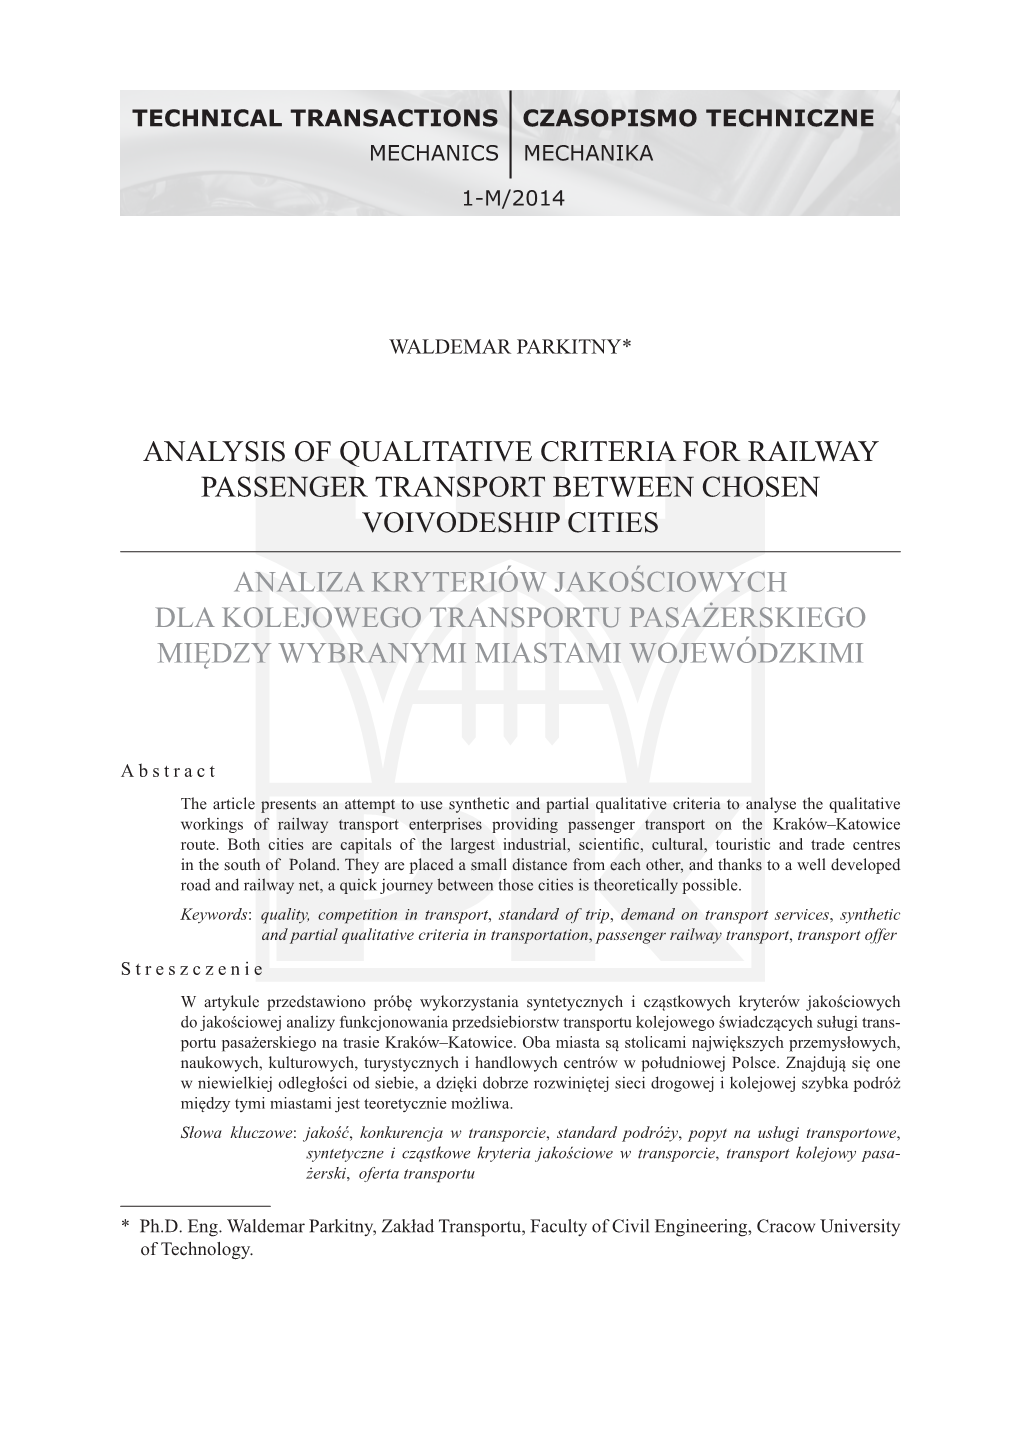 Analysis of Qualitative Criteria for Railway Passenger Transport Between Chosen Voivodeship Cities